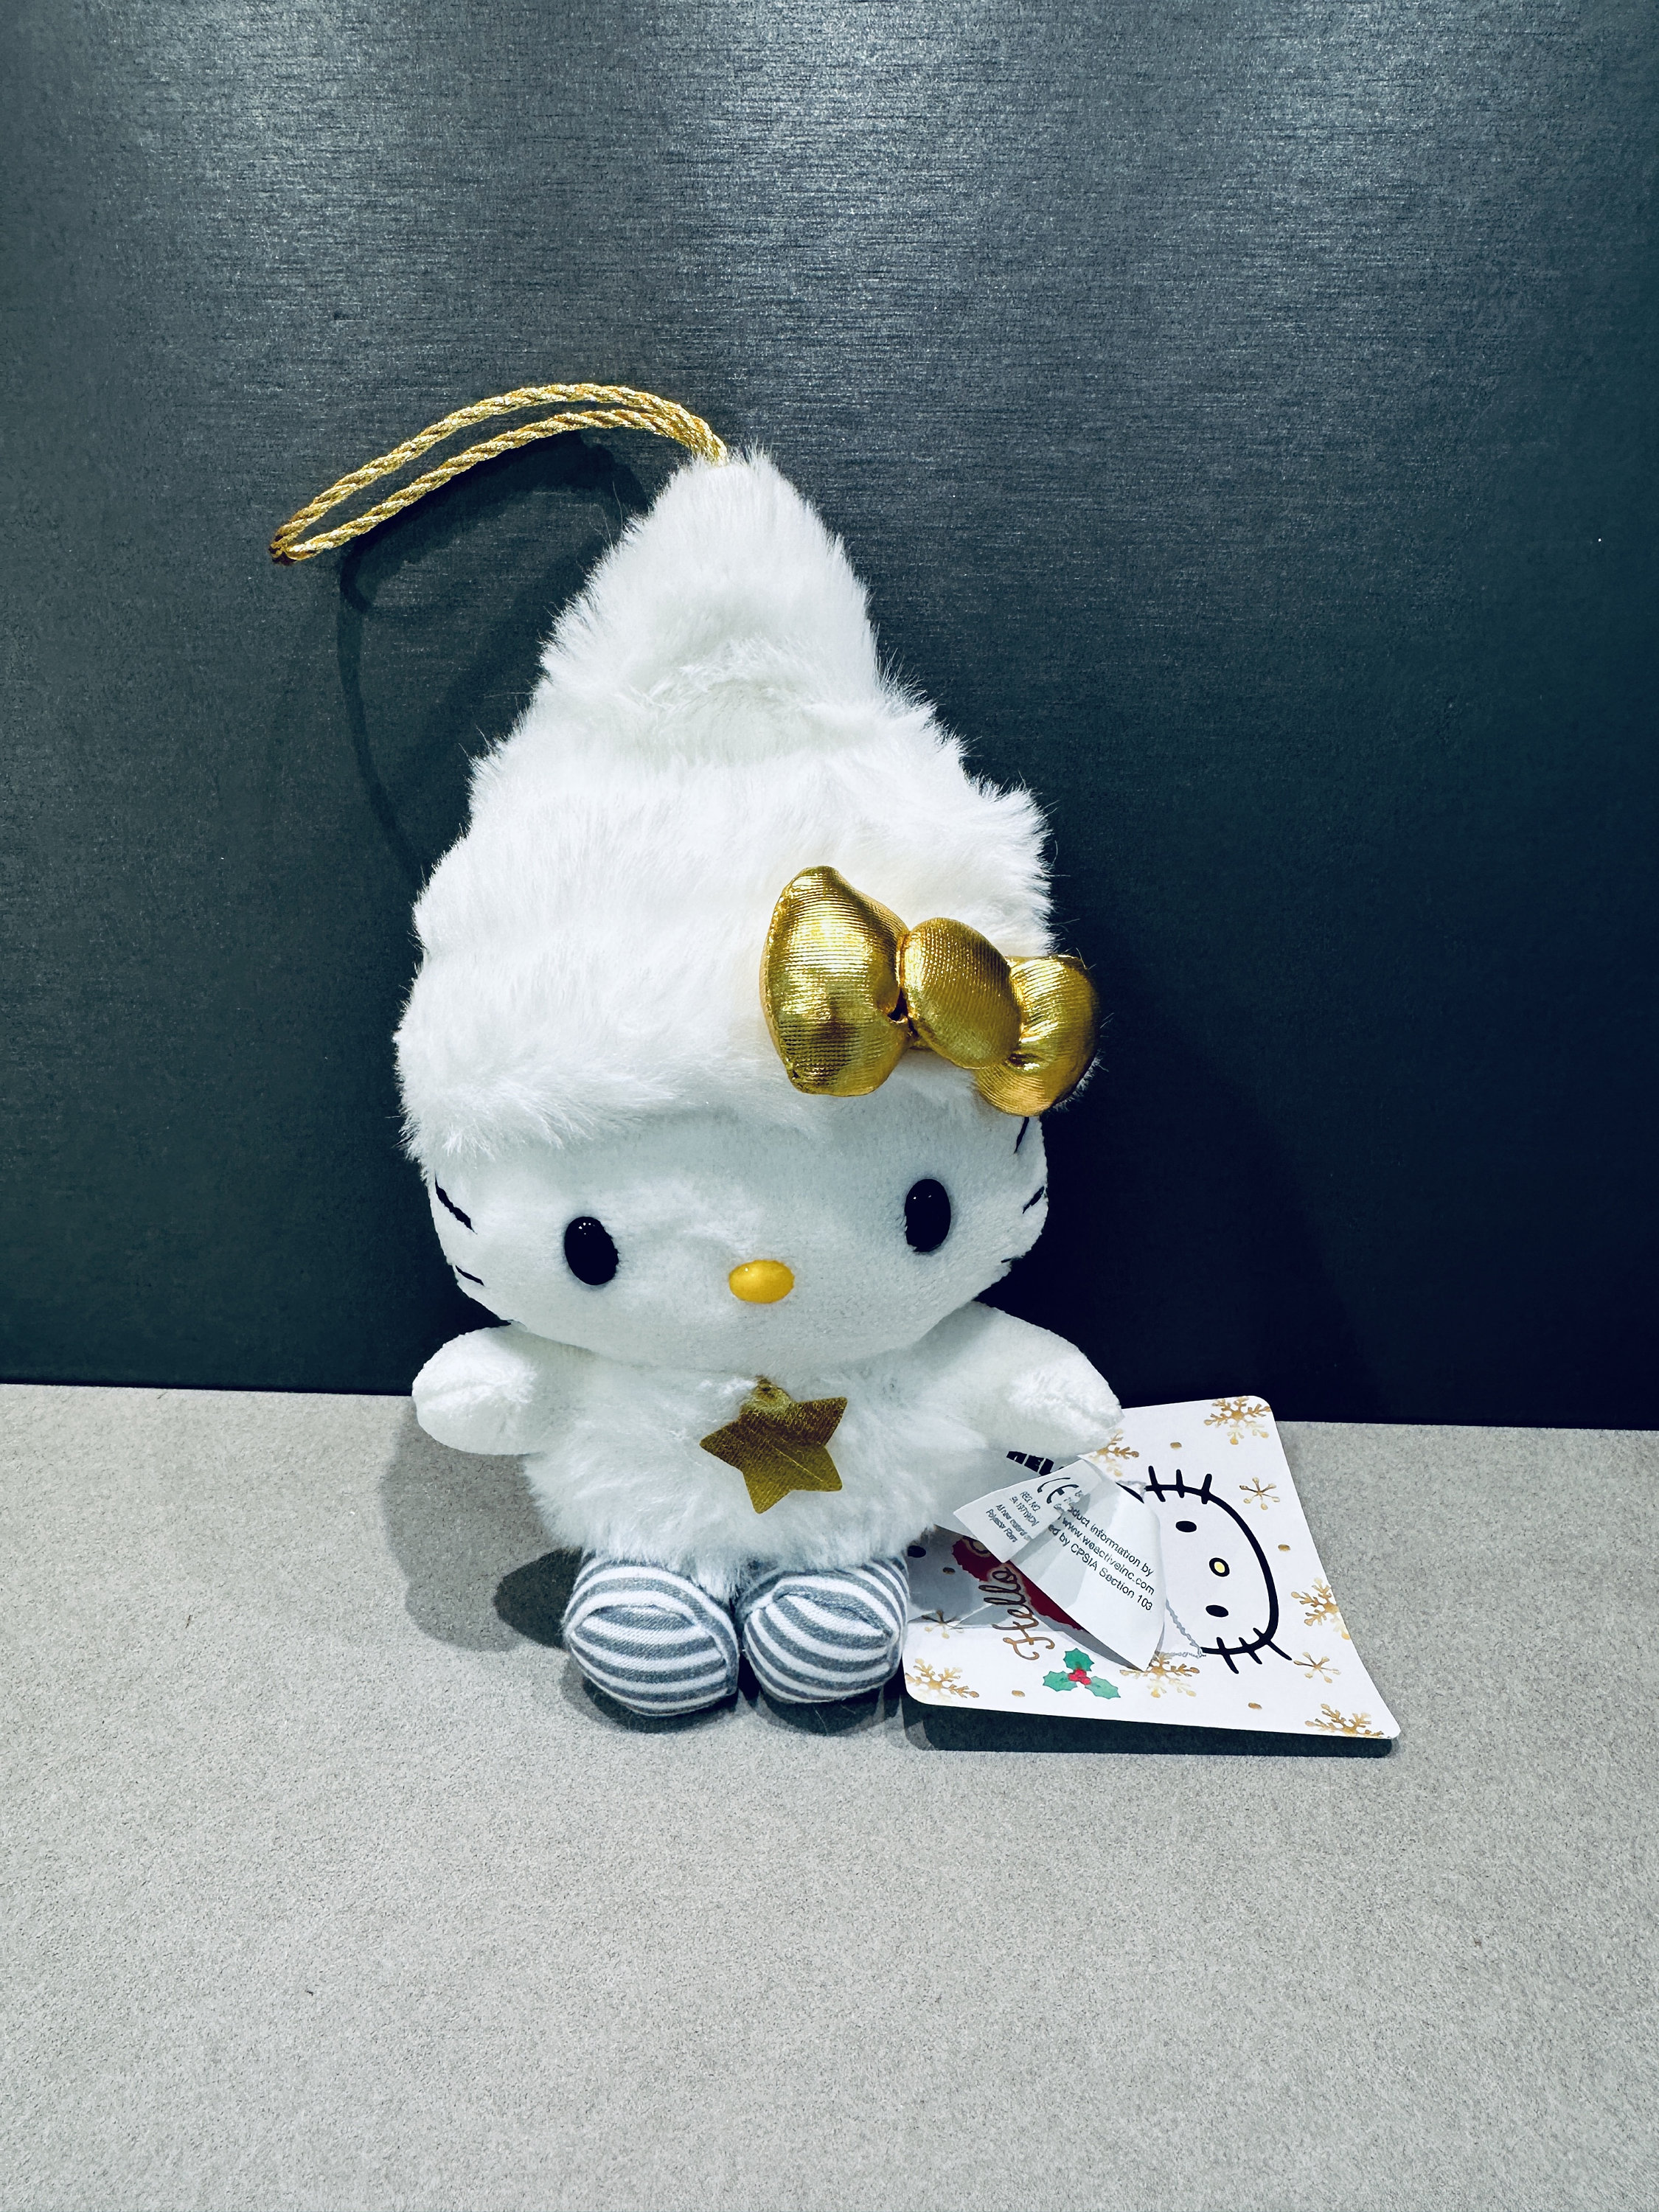 Kawaii Tokidoki Unicorn Plush Toy Soft Stuffed Unicorn Plush Dolls Cartoon  Animal Pillow For Children Girl Birthday Gift